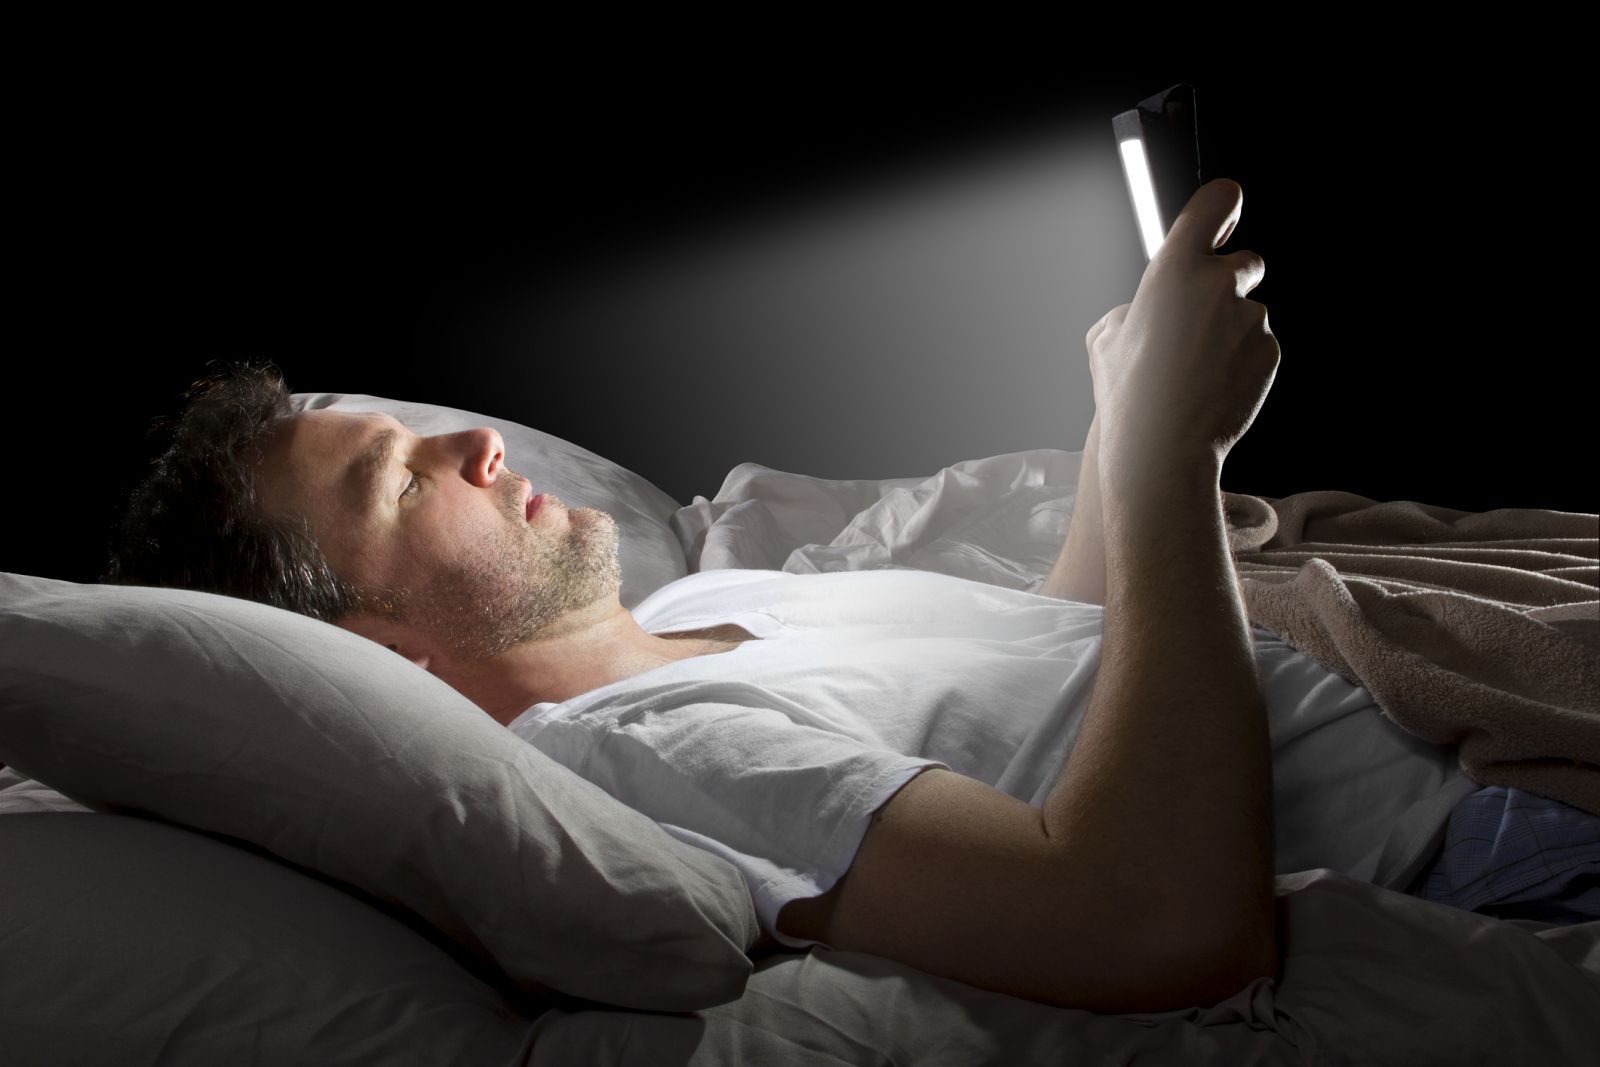 NightScreendreamstime m 40479813 إستعمال "الهاتف الجوال" في الظلام قد يفقدك البصر - تعرف على طريقة الوقاية